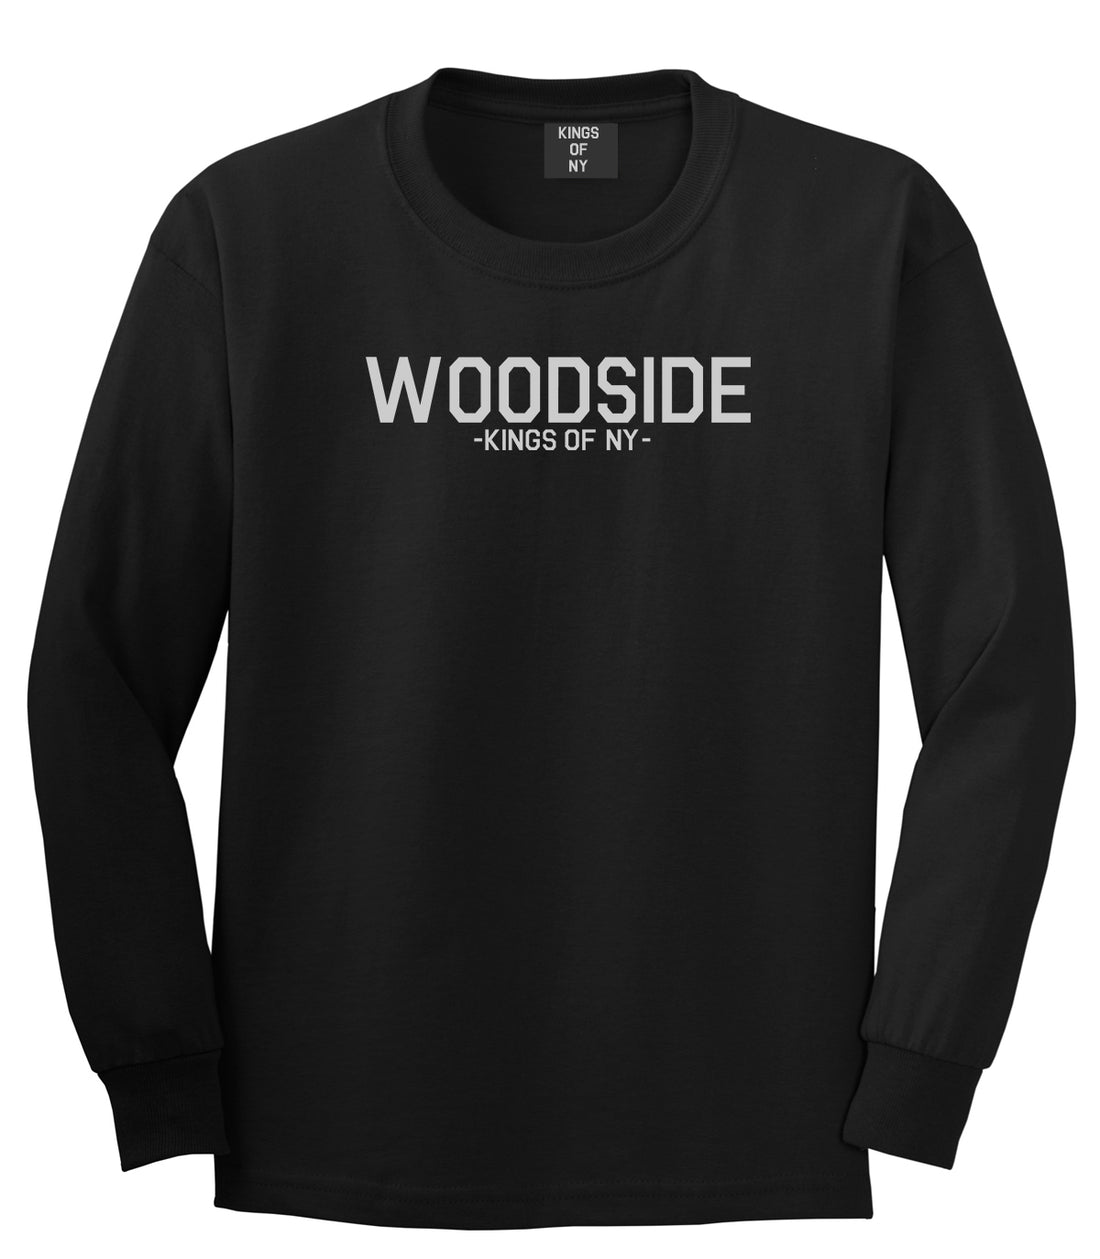 Woodside Queens New York Mens Long Sleeve T-Shirt Black